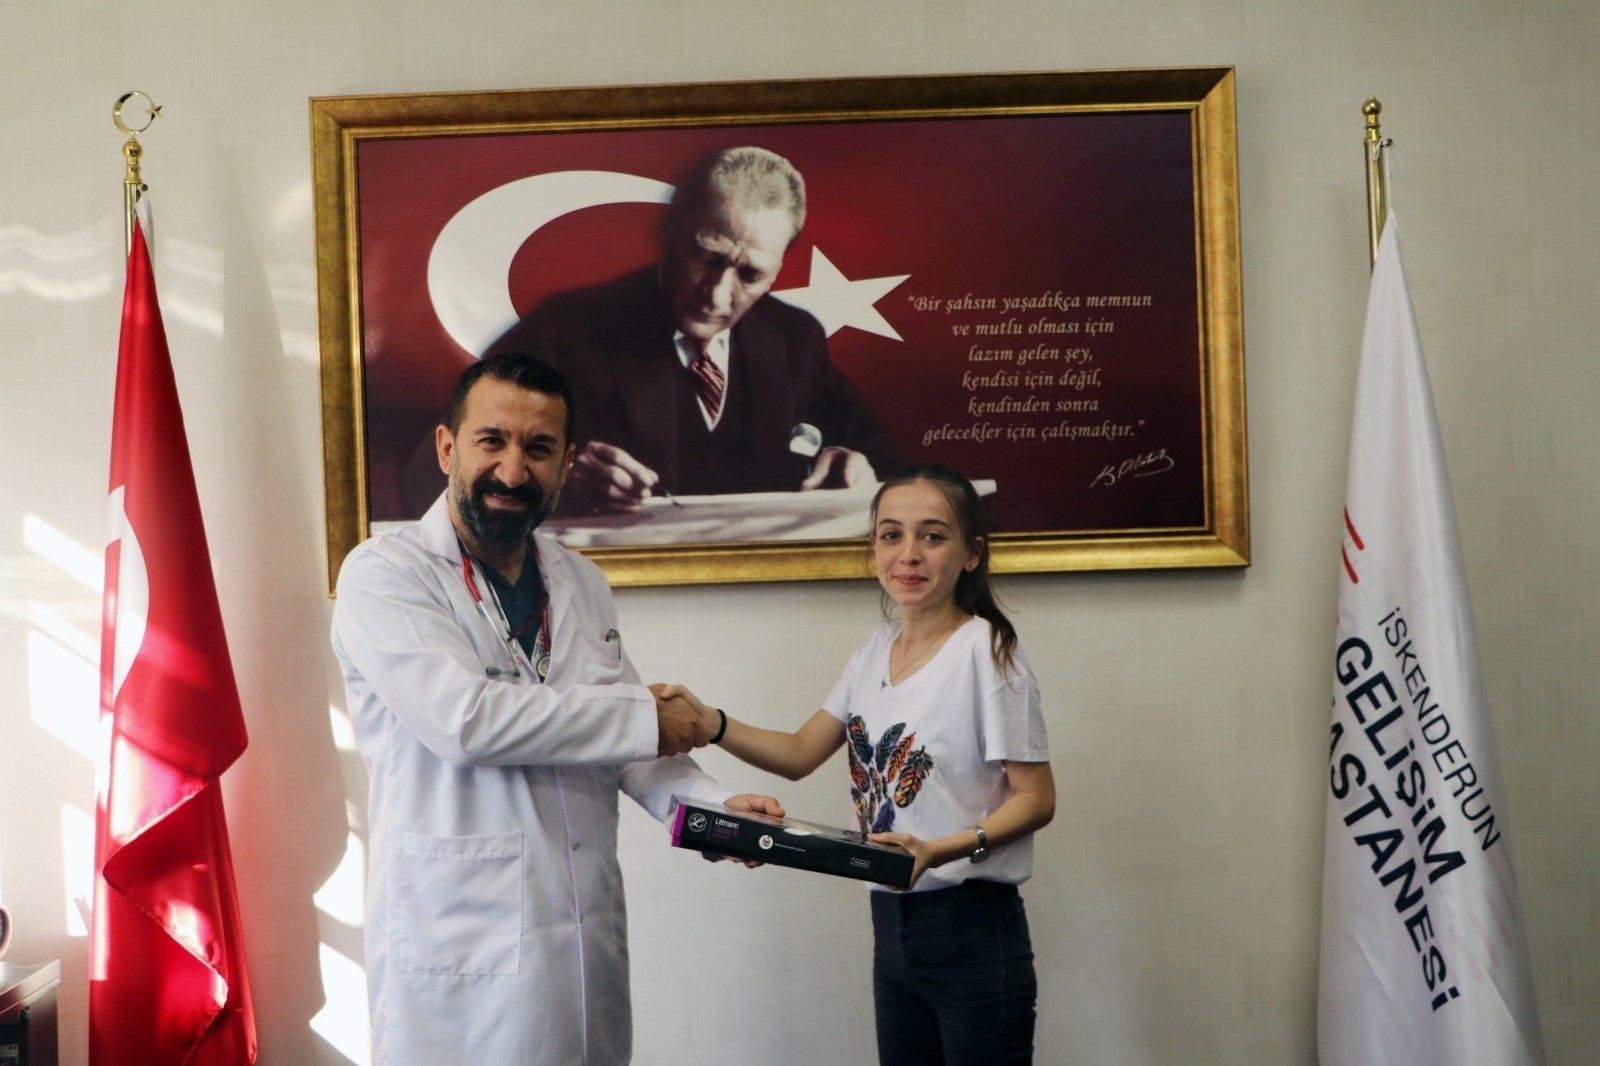 Başhekim Turhan’dan tıp fakültesini kazanan Helin’e steteskop